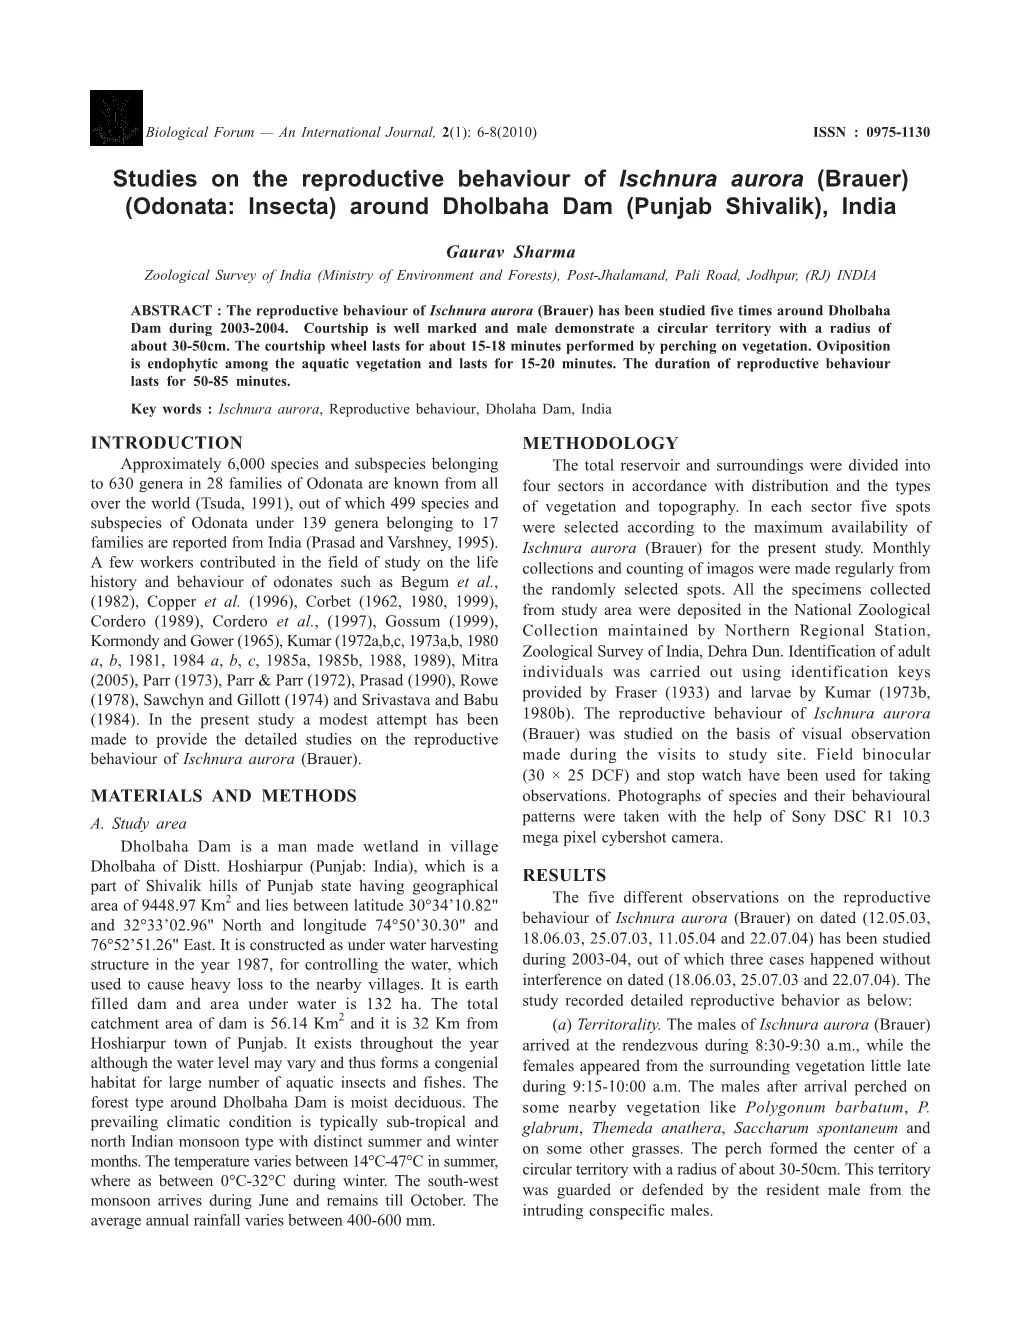 Studies on the Reproductive Behaviour of Ischnura Aurora (Brauer) (Odonata: Insecta) Around Dholbaha Dam (Punjab Shivalik), India